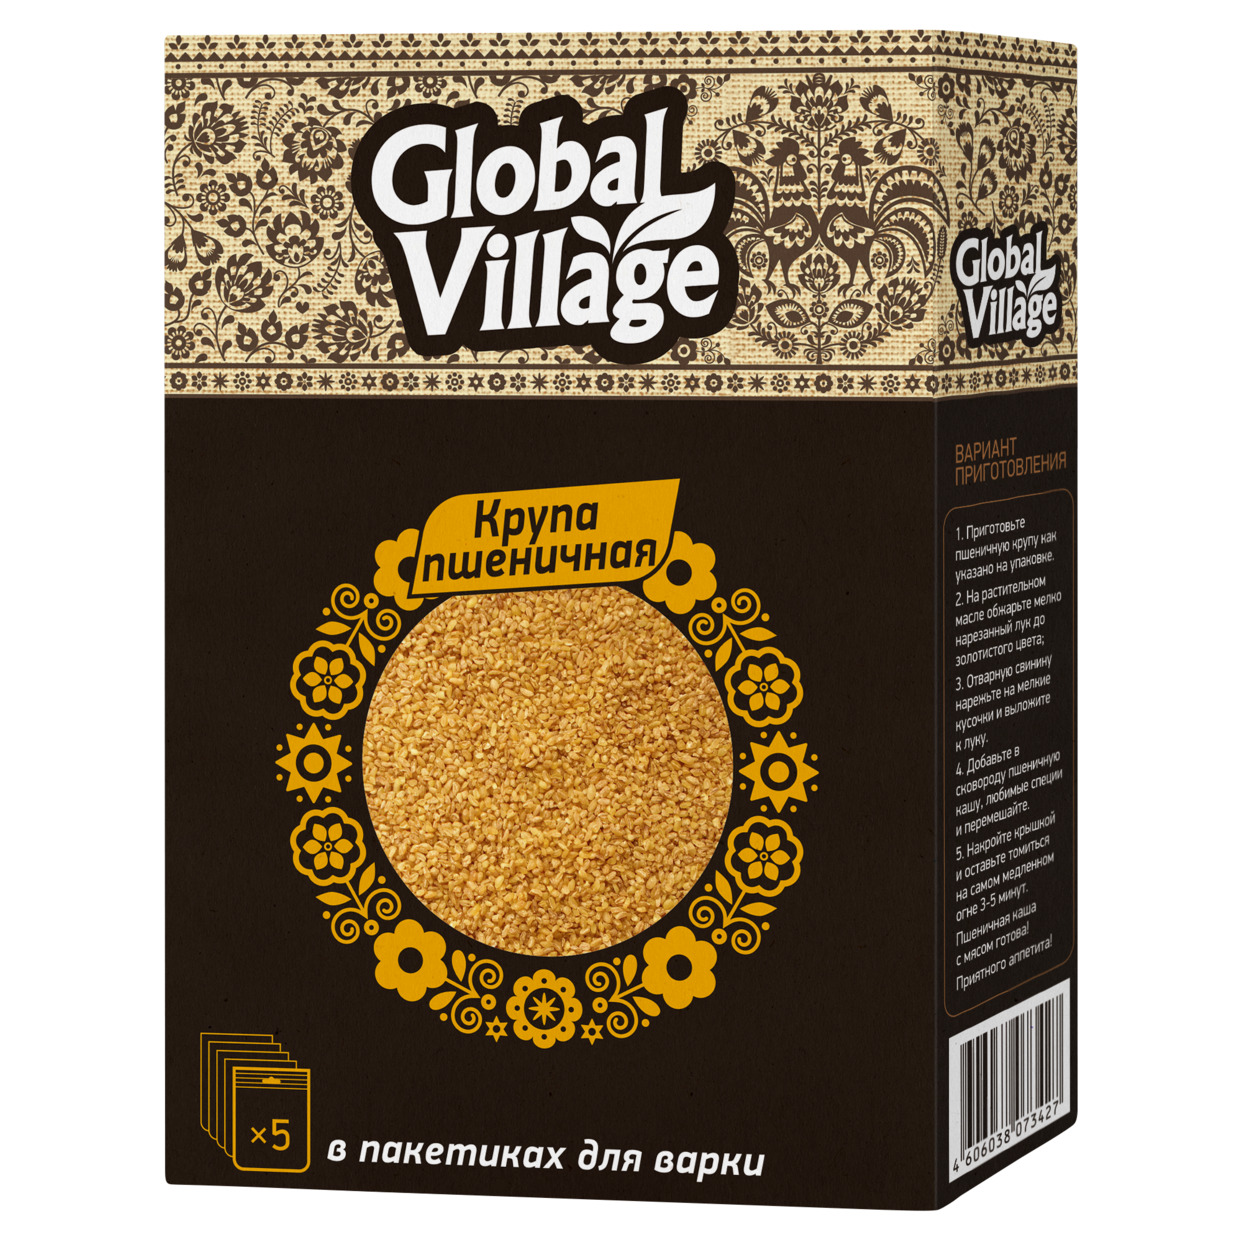 Крупа пшеничная в пакетиках для варки Global Village 5*80 гр